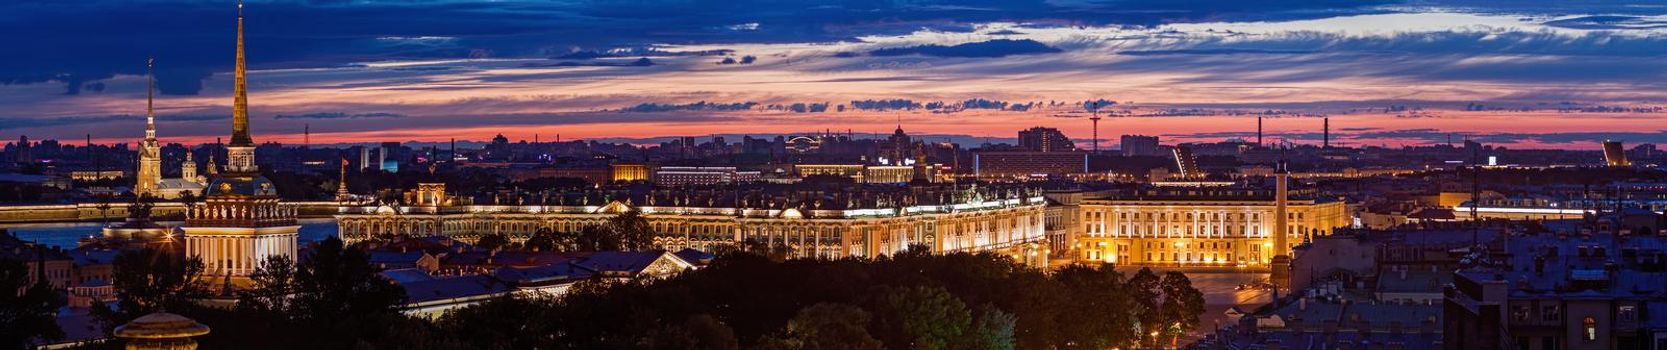 Night panoramic shot of Saint Petersburg's historical center whole bridges is opened.